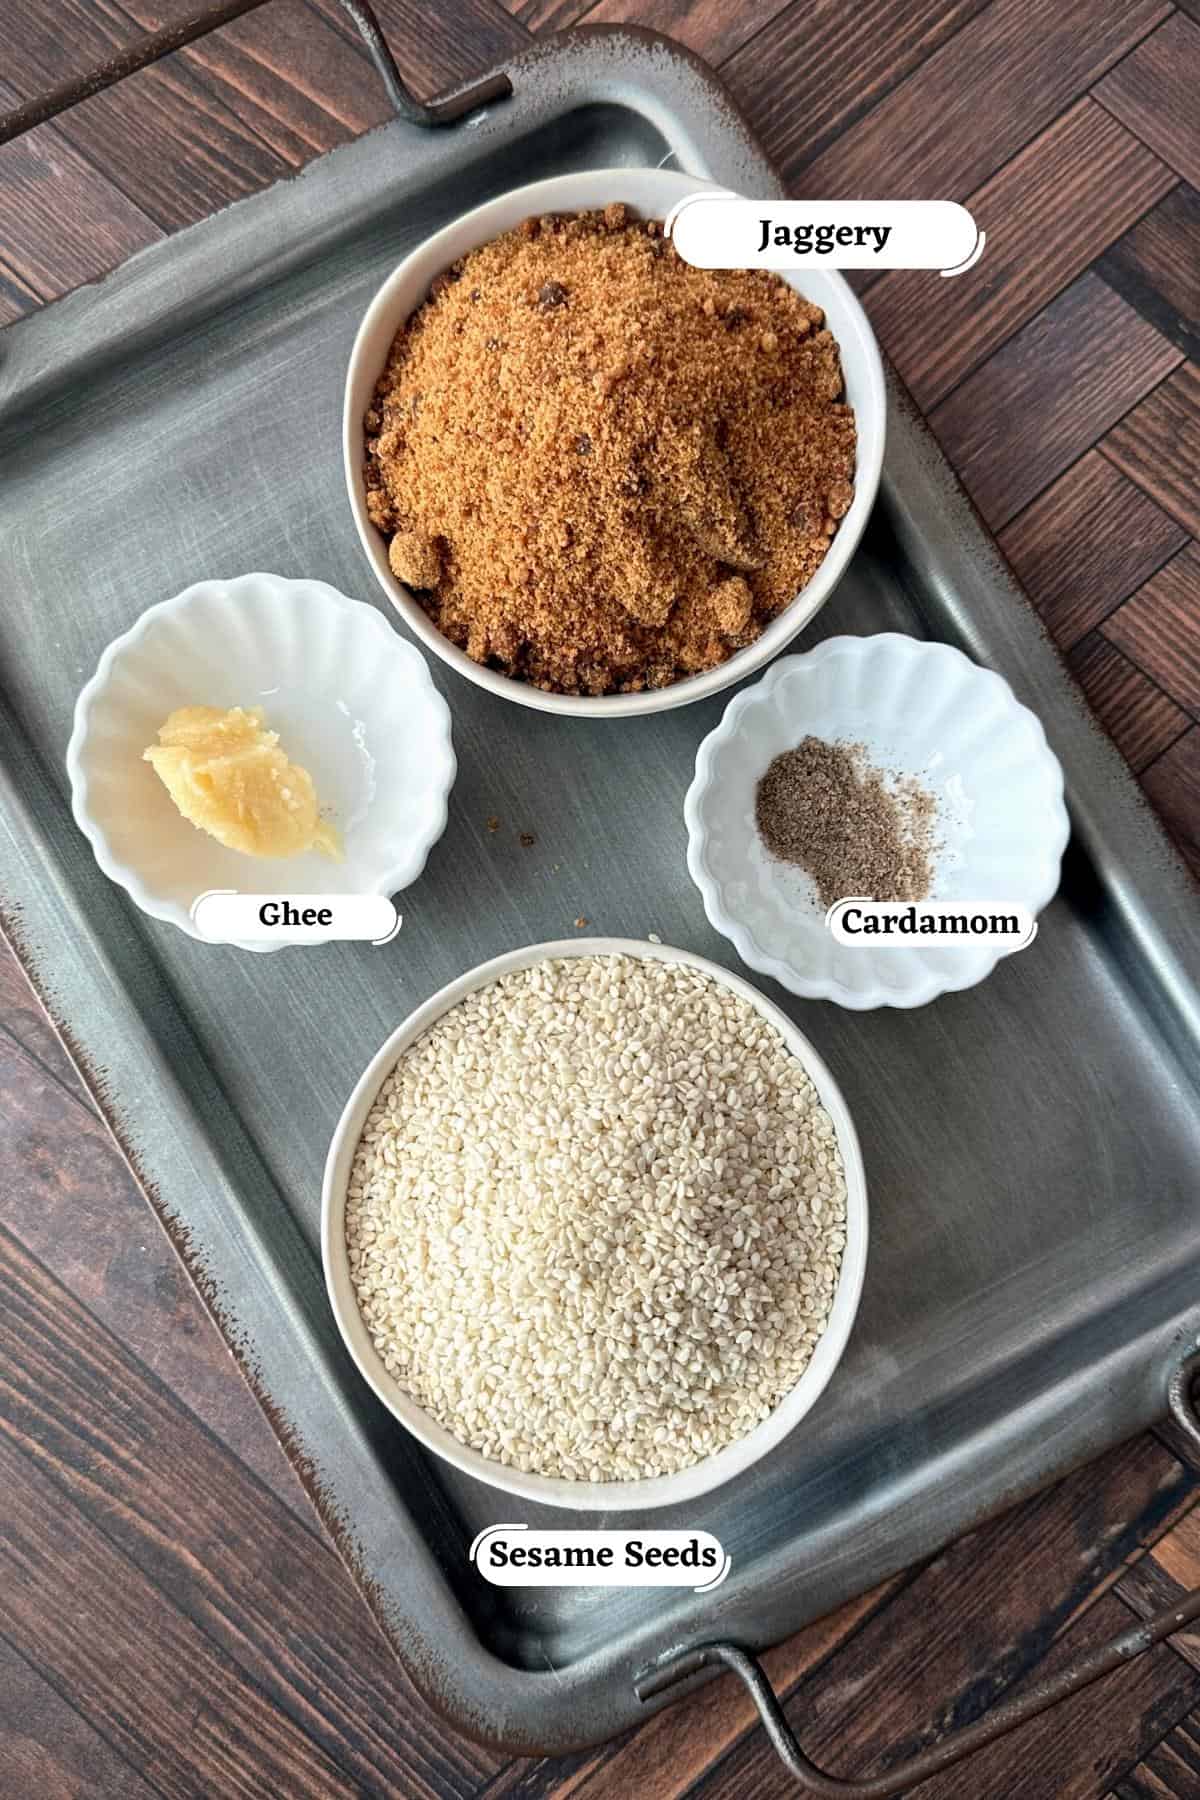 Sesame seeds, jaggery powder, ghee and cardamom powder on tray